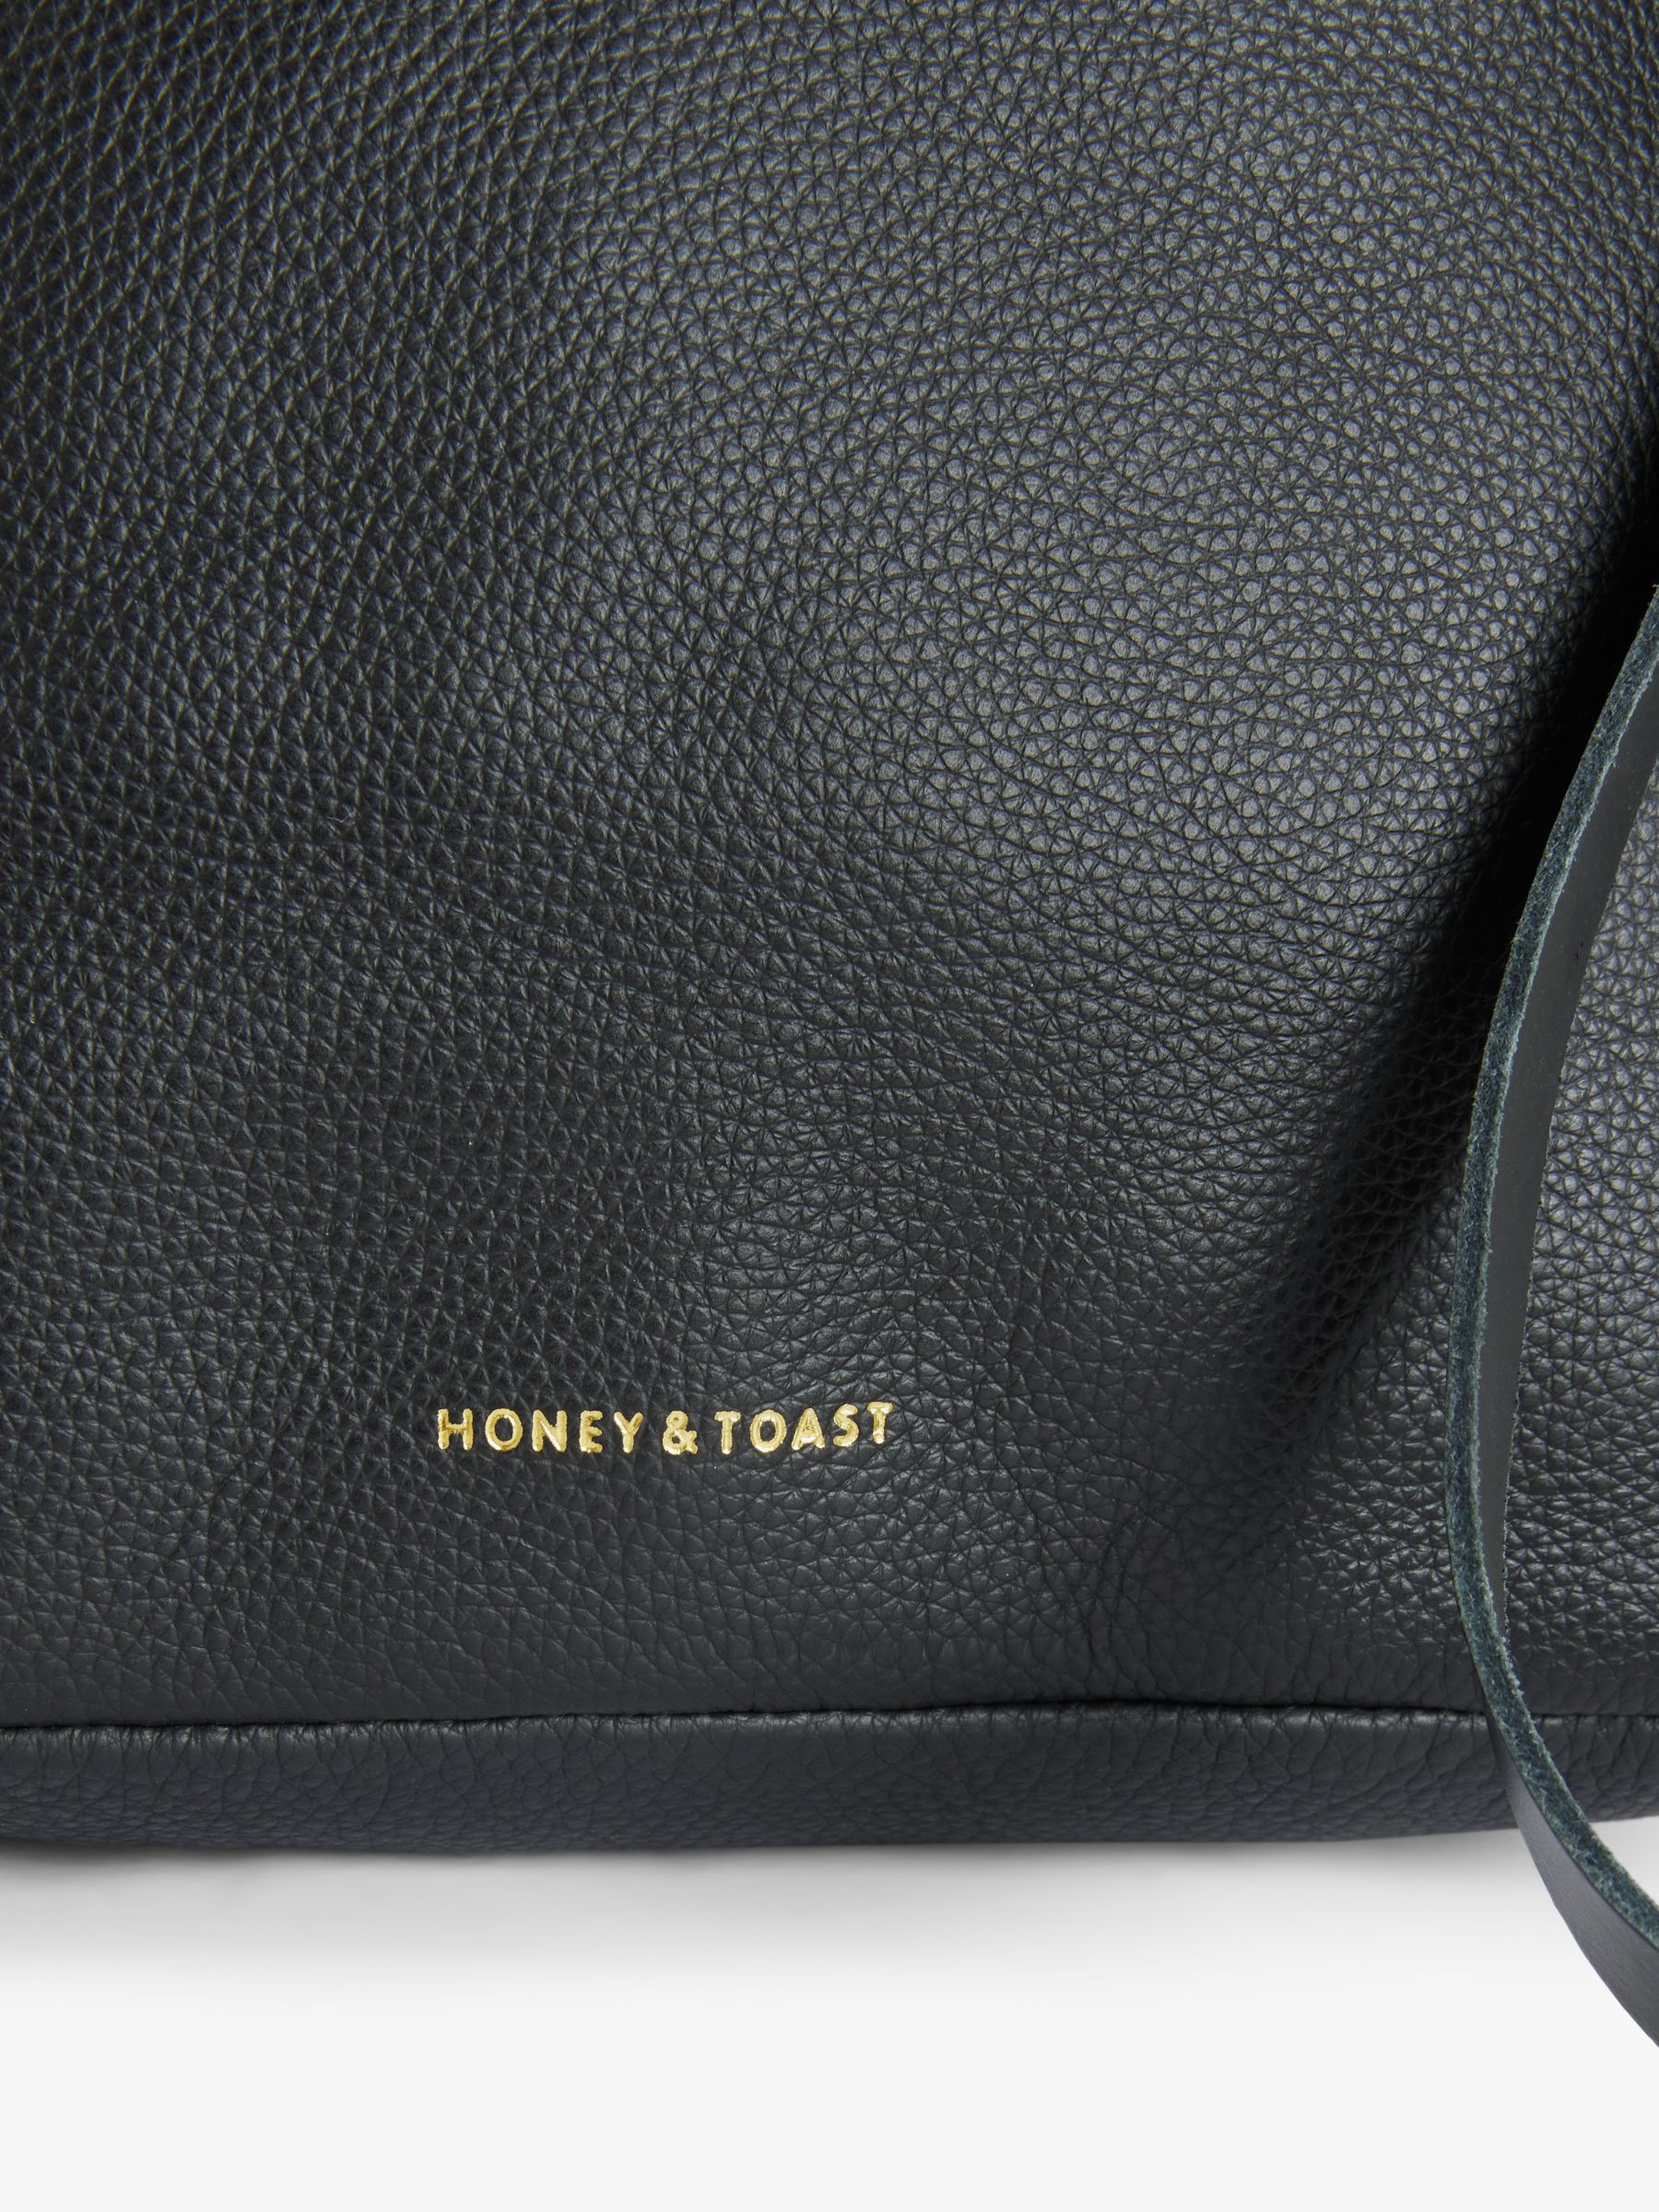 Honey & Toast Libby Leather Hobo Bag, Black at John Lewis & Partners